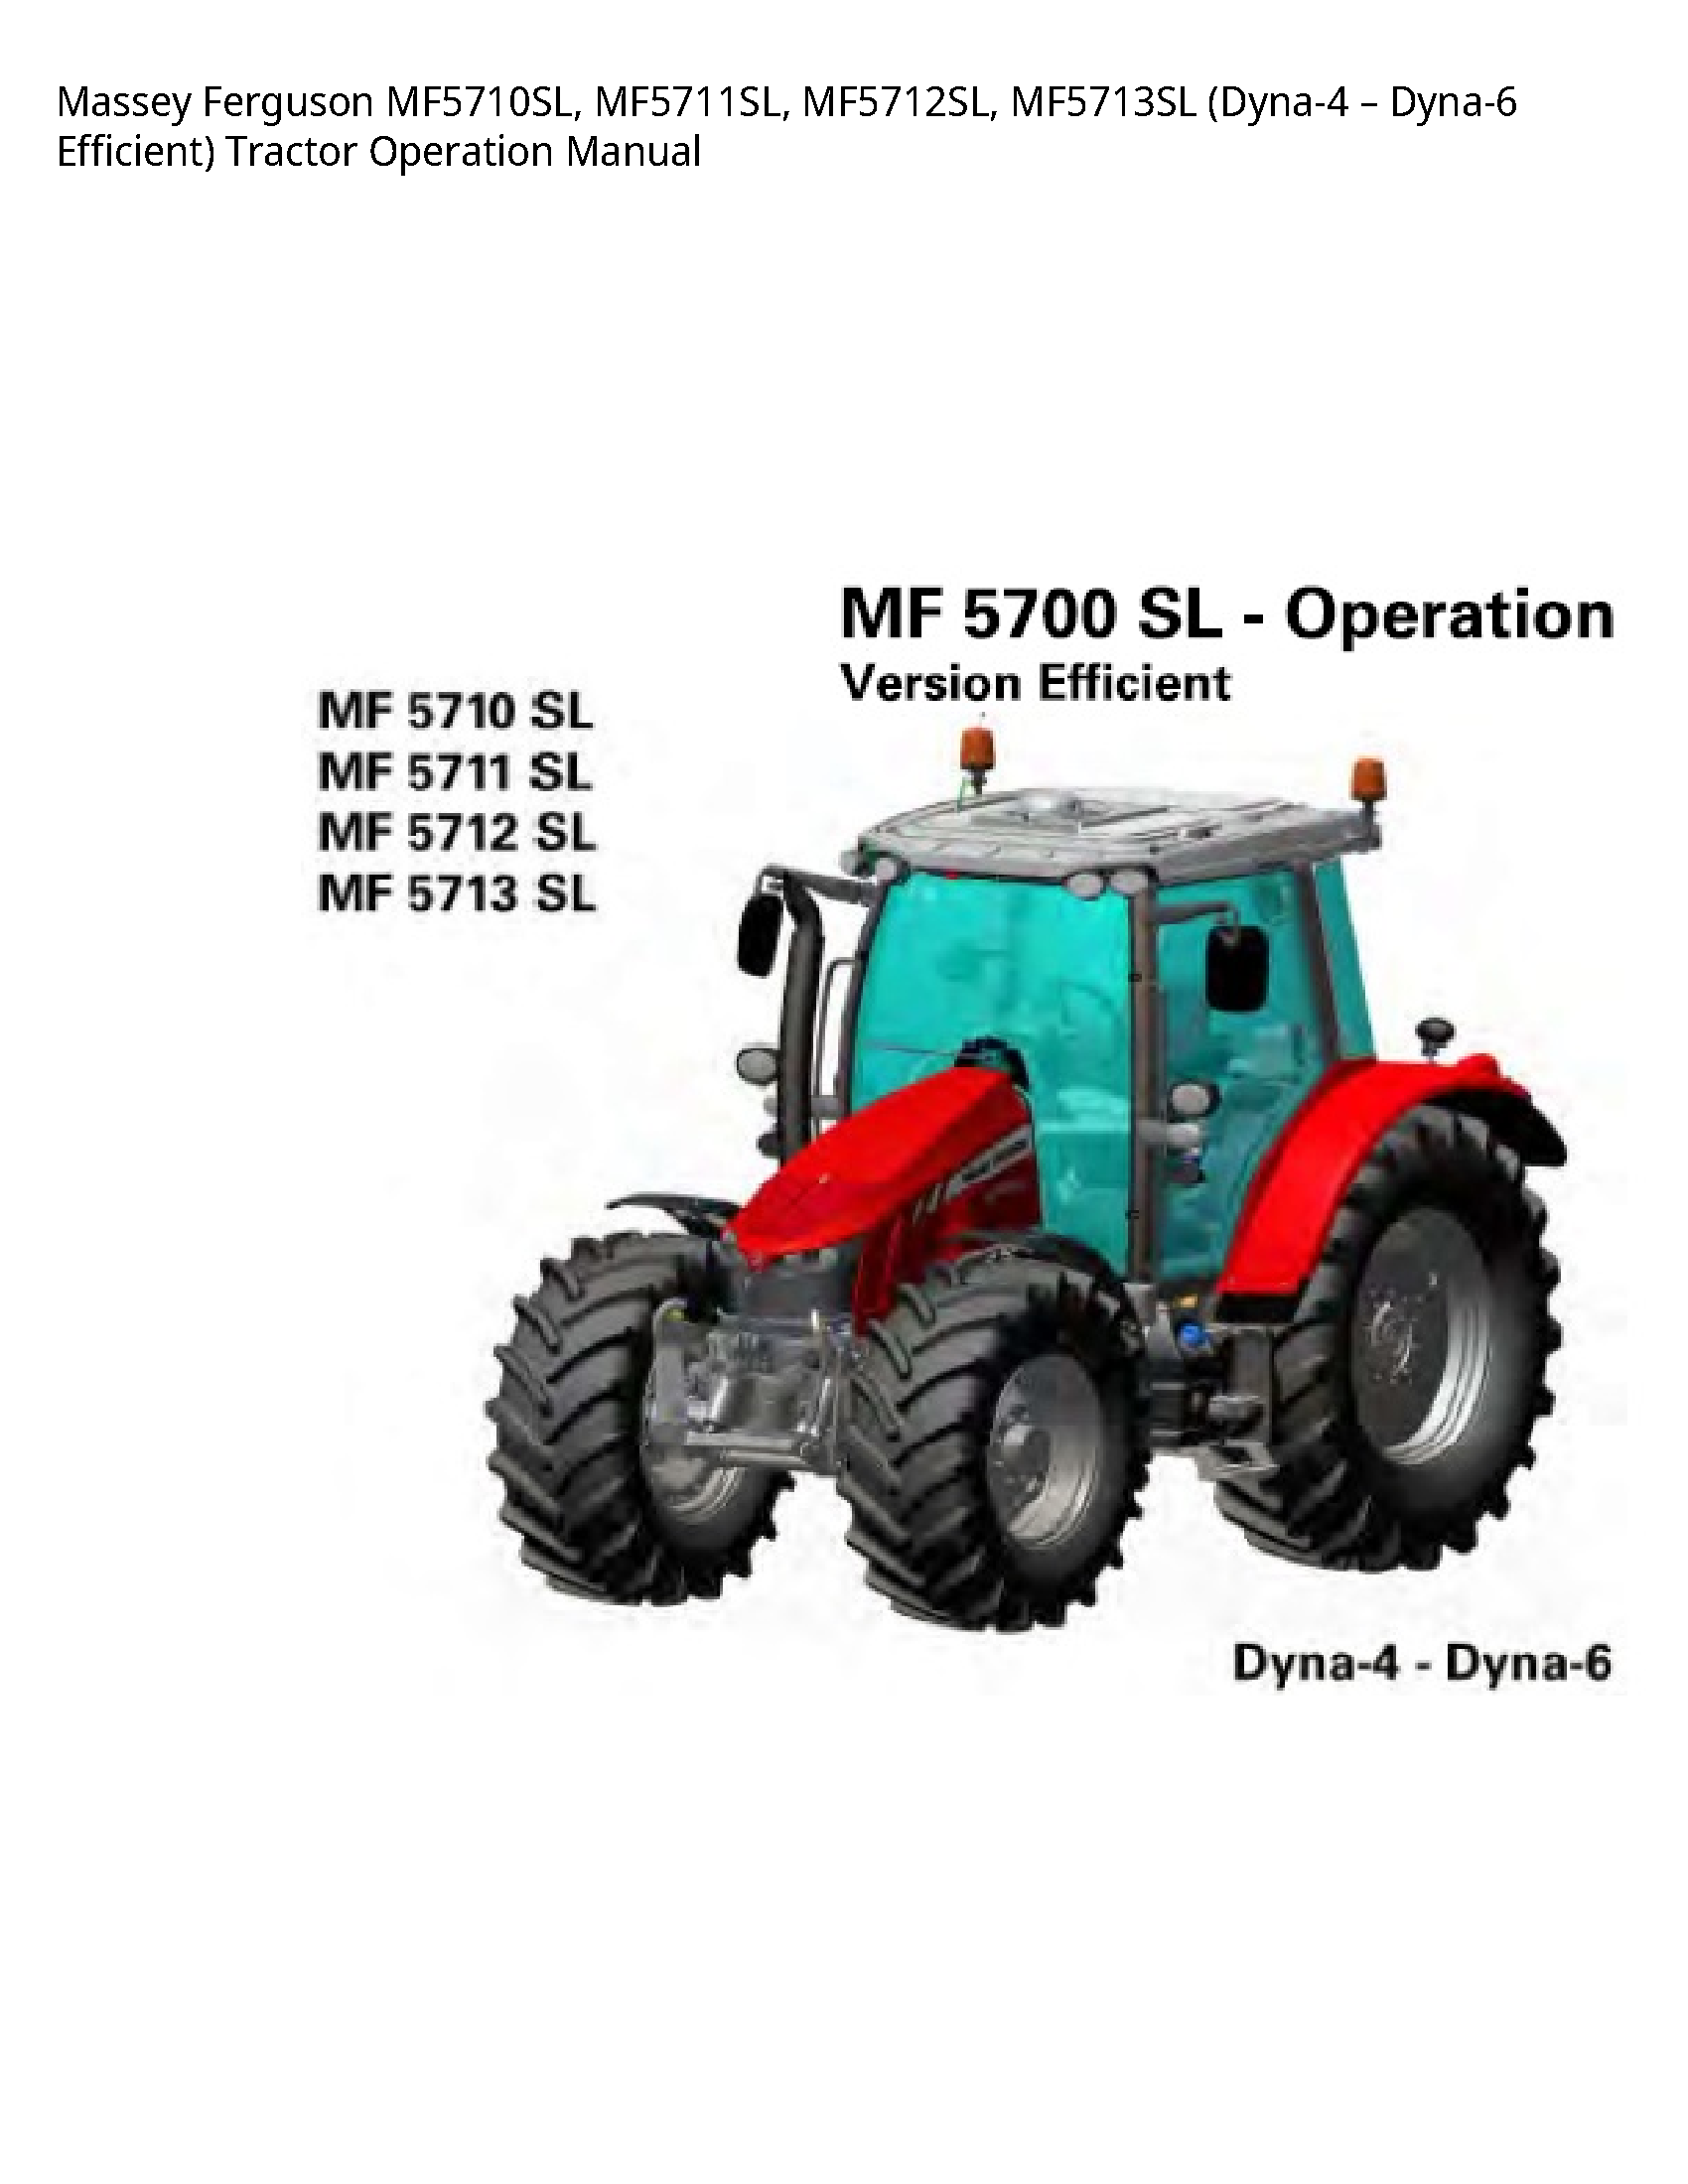 Massey Ferguson MF5710SL Efficient) Tractor Operation manual